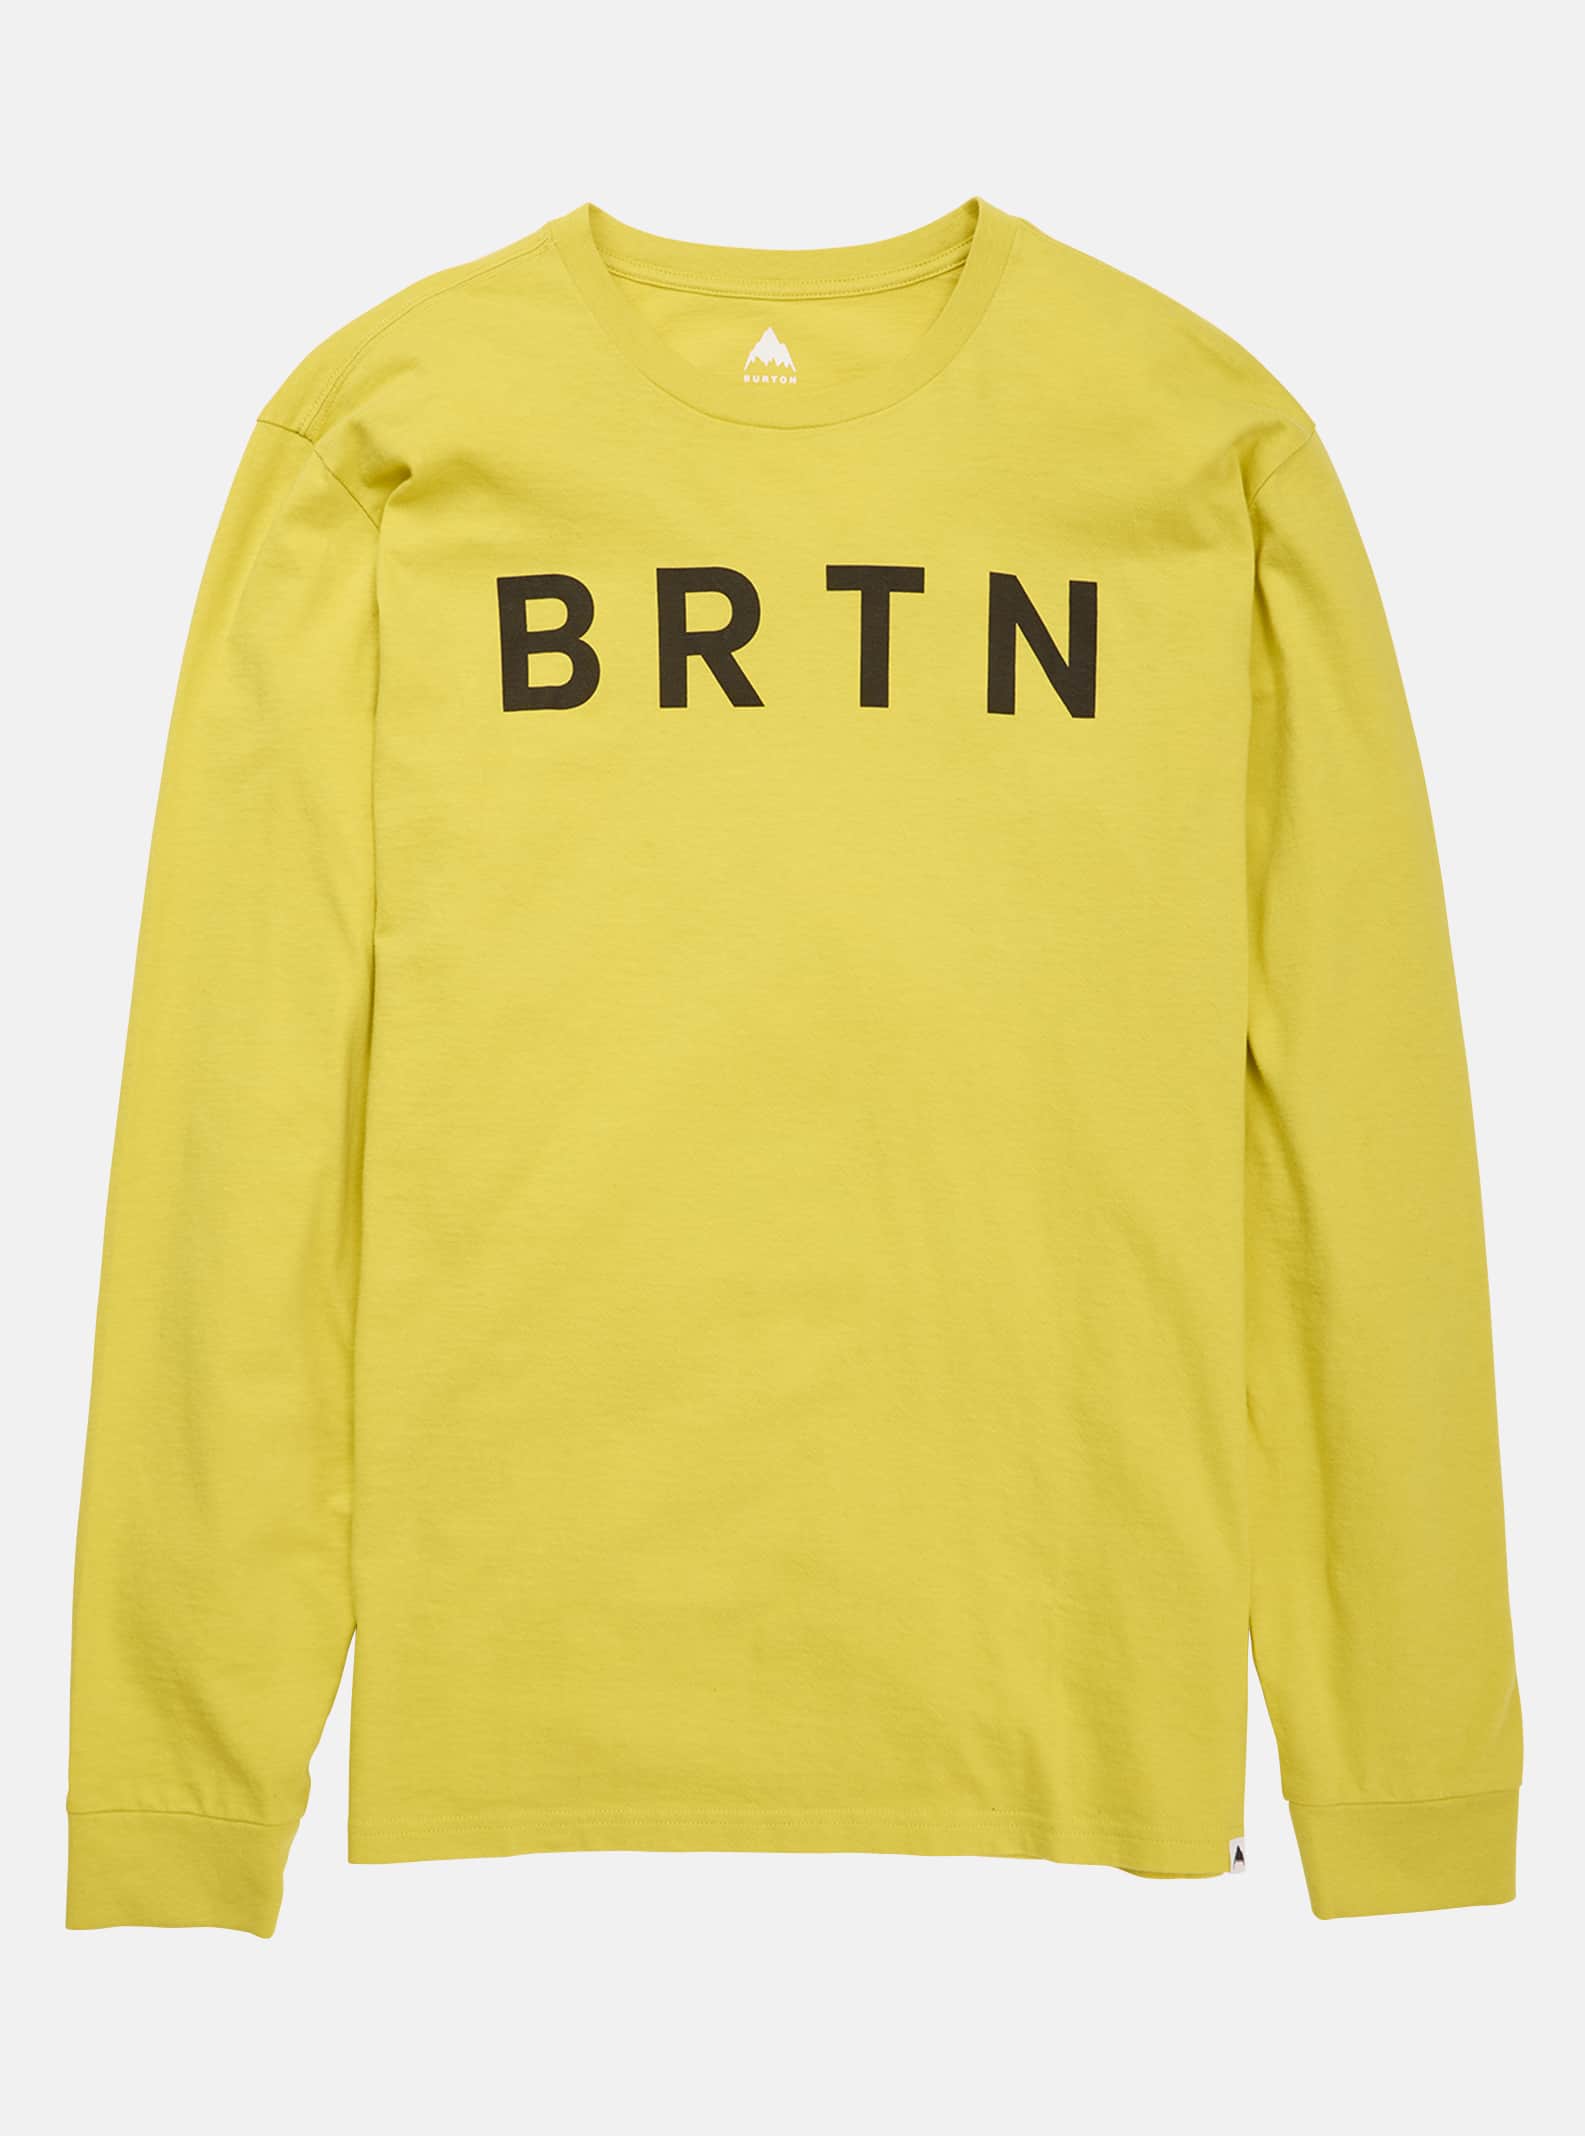 Burton BRTN Long Sleeve T-Shirt, L